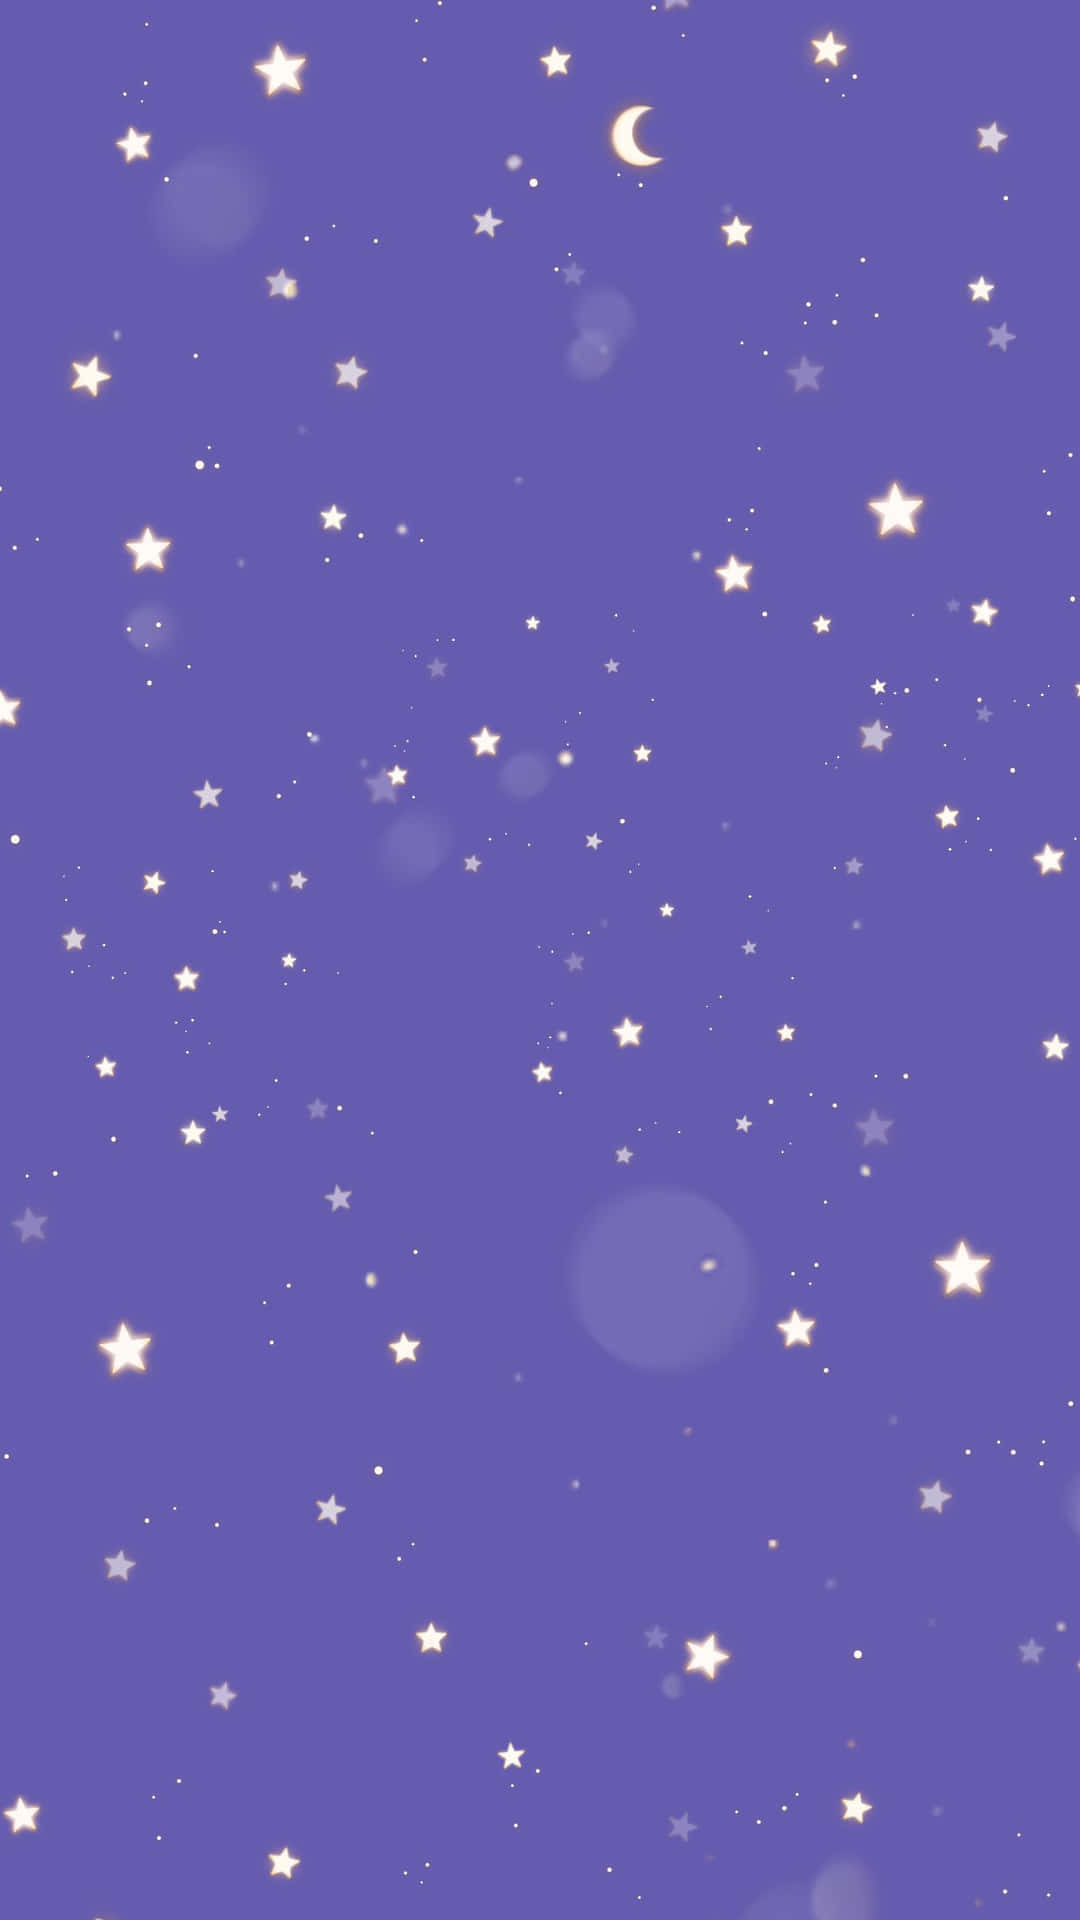 Shine Bright Like a Purple Star Wallpaper